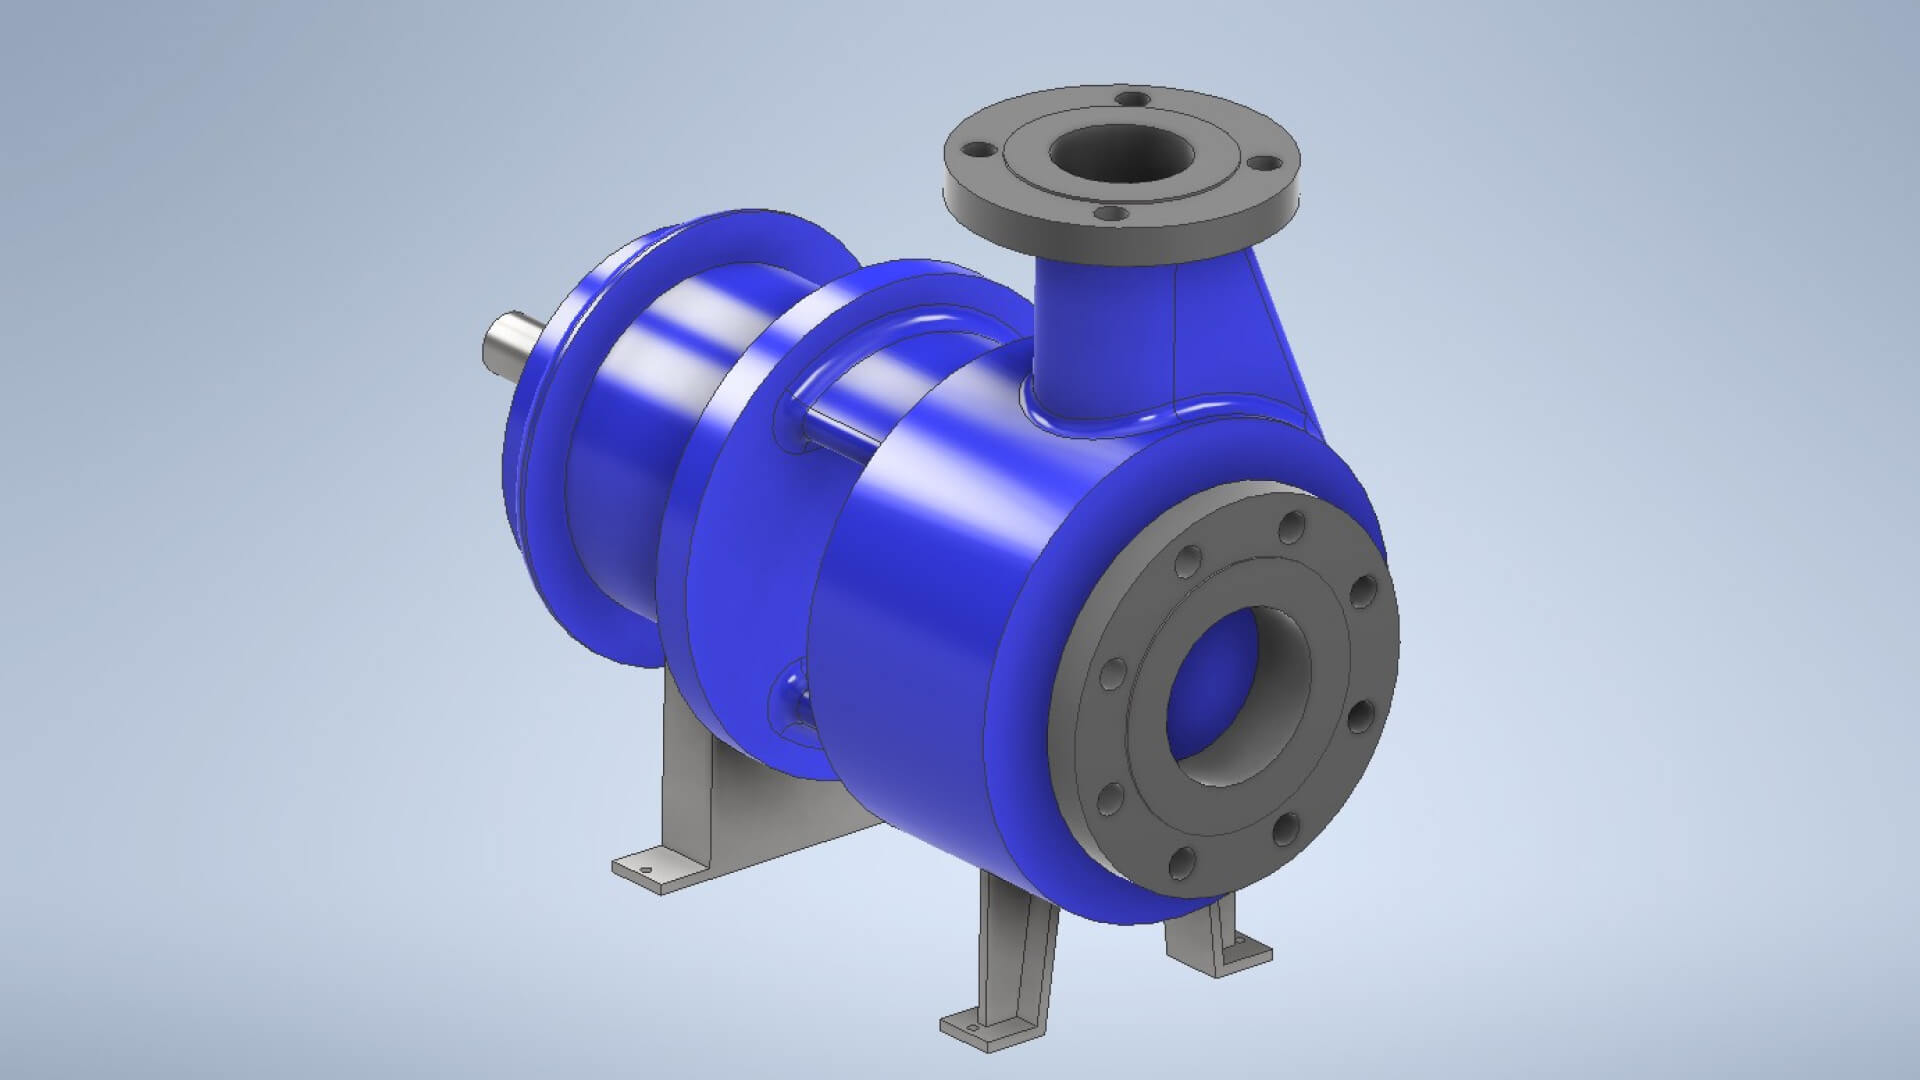 A 3D CAD drawing of an ANSI centrifugal pump